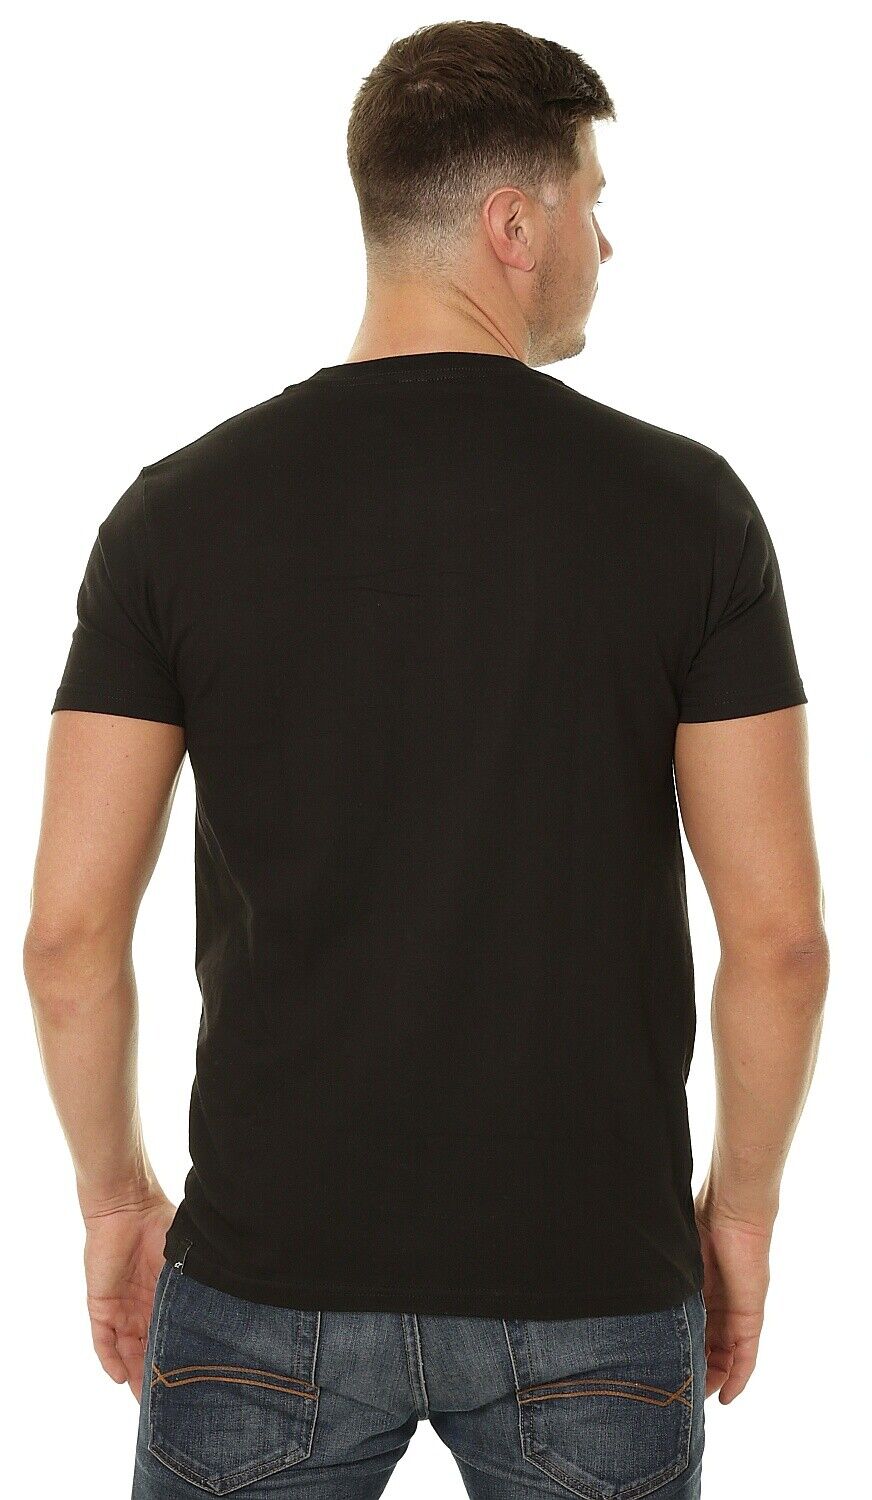 Alpinestars Ride 2.0 Black T'shirt - 1038720001